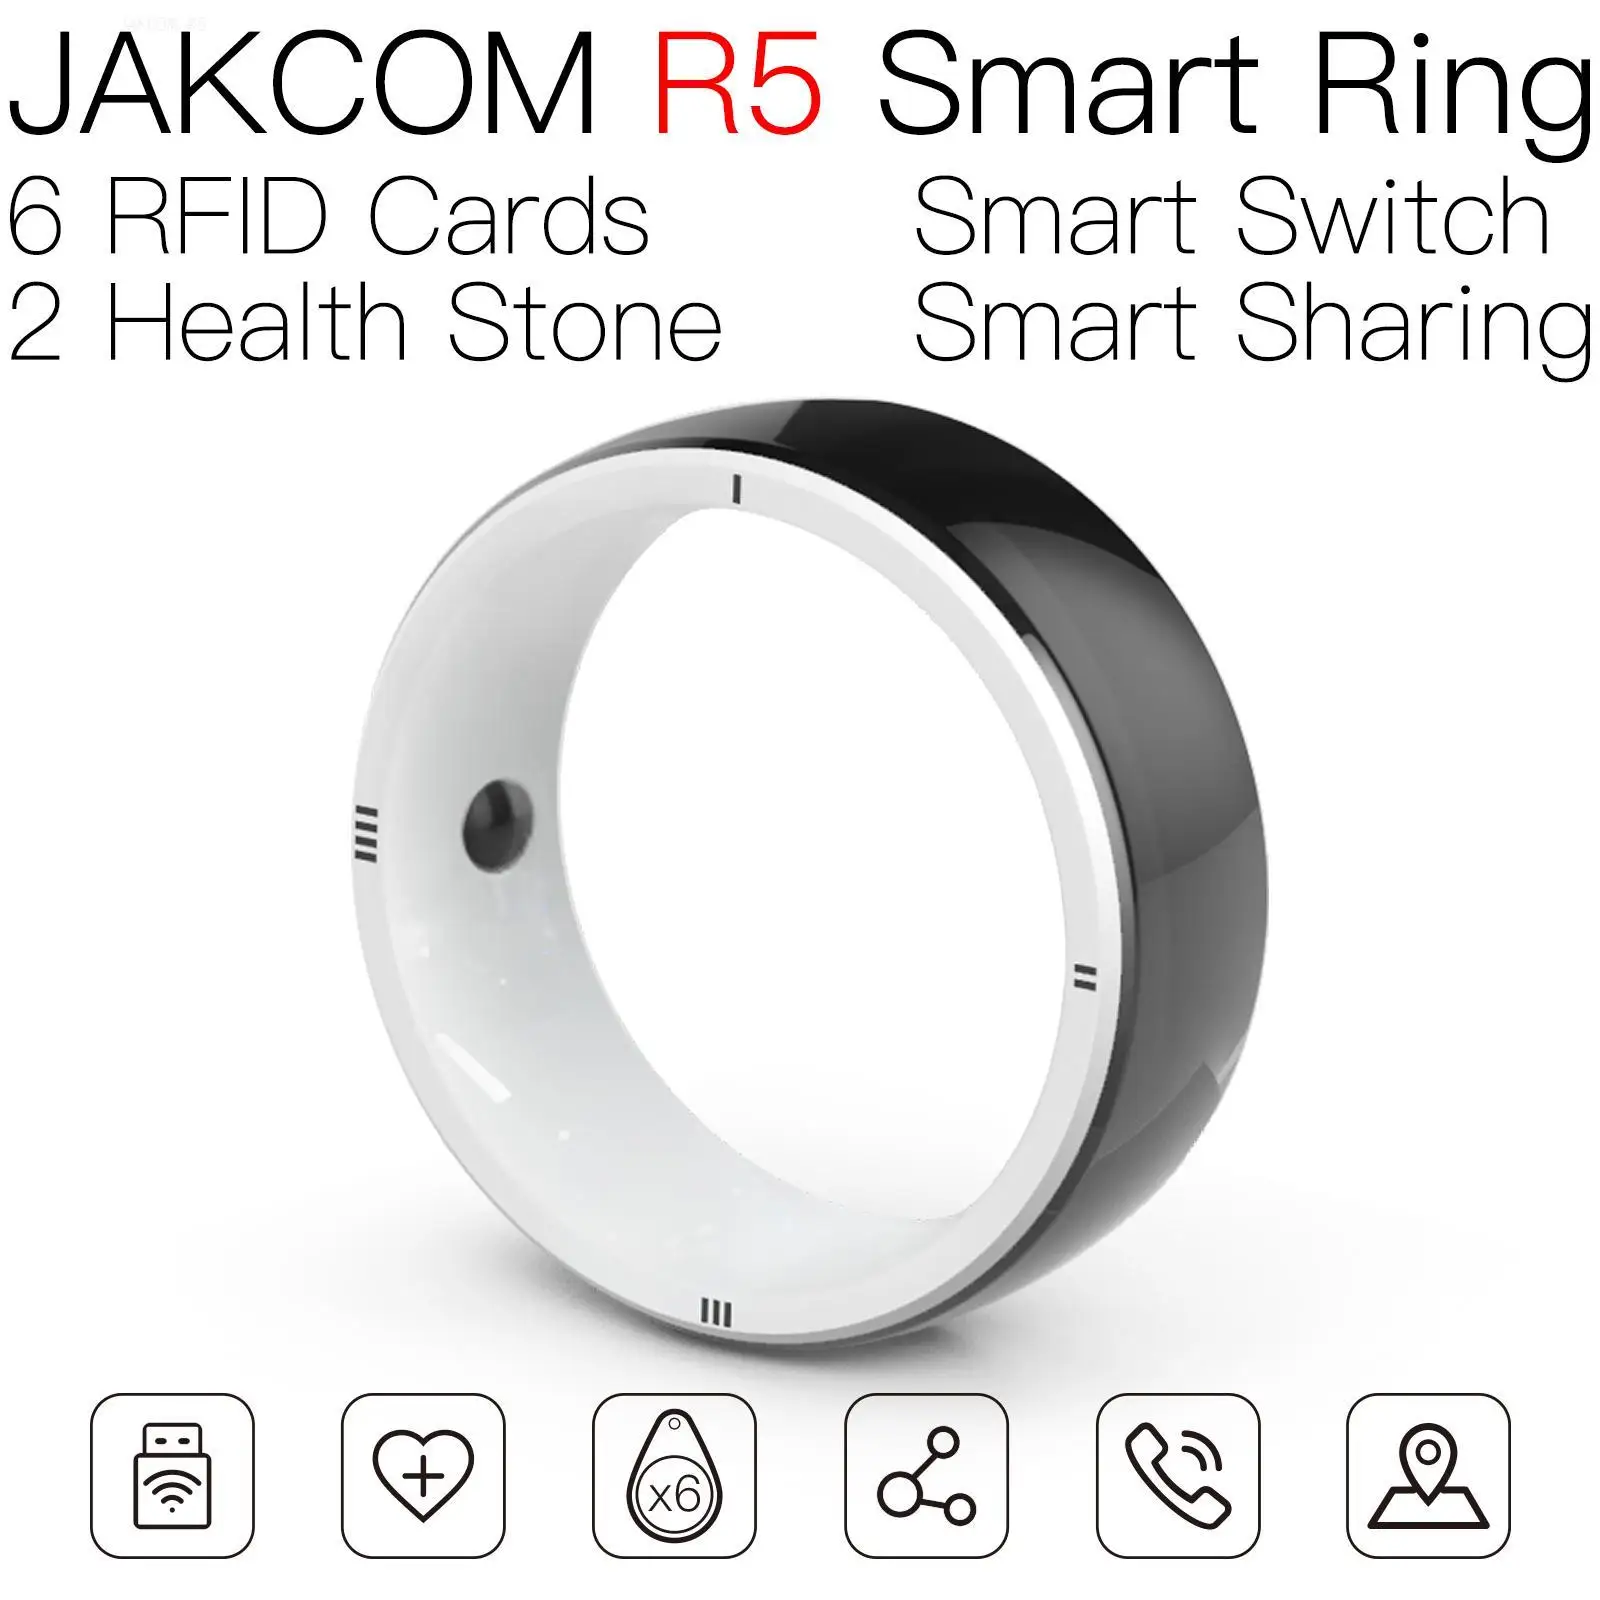 

JAKCOM R5 Smart Ring Super value as inserto rfid 125khz writable rewritable t5577 keyfobs proximity access tags 125 bracelet